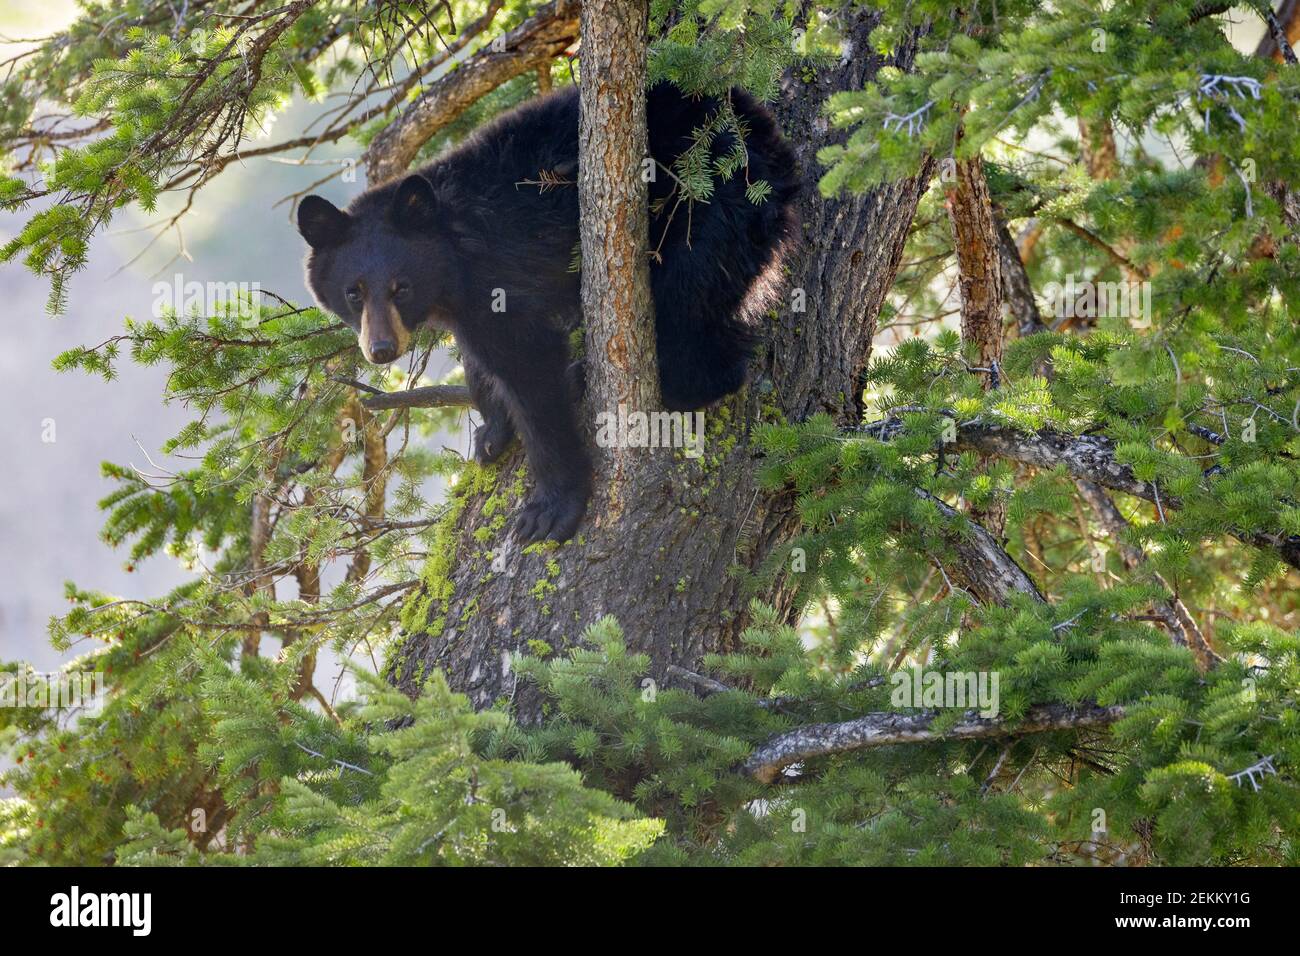 Yellowstone National Park, WY: American Black Bear (Ursus americanus) in a Douglas Fir tree Stock Photo